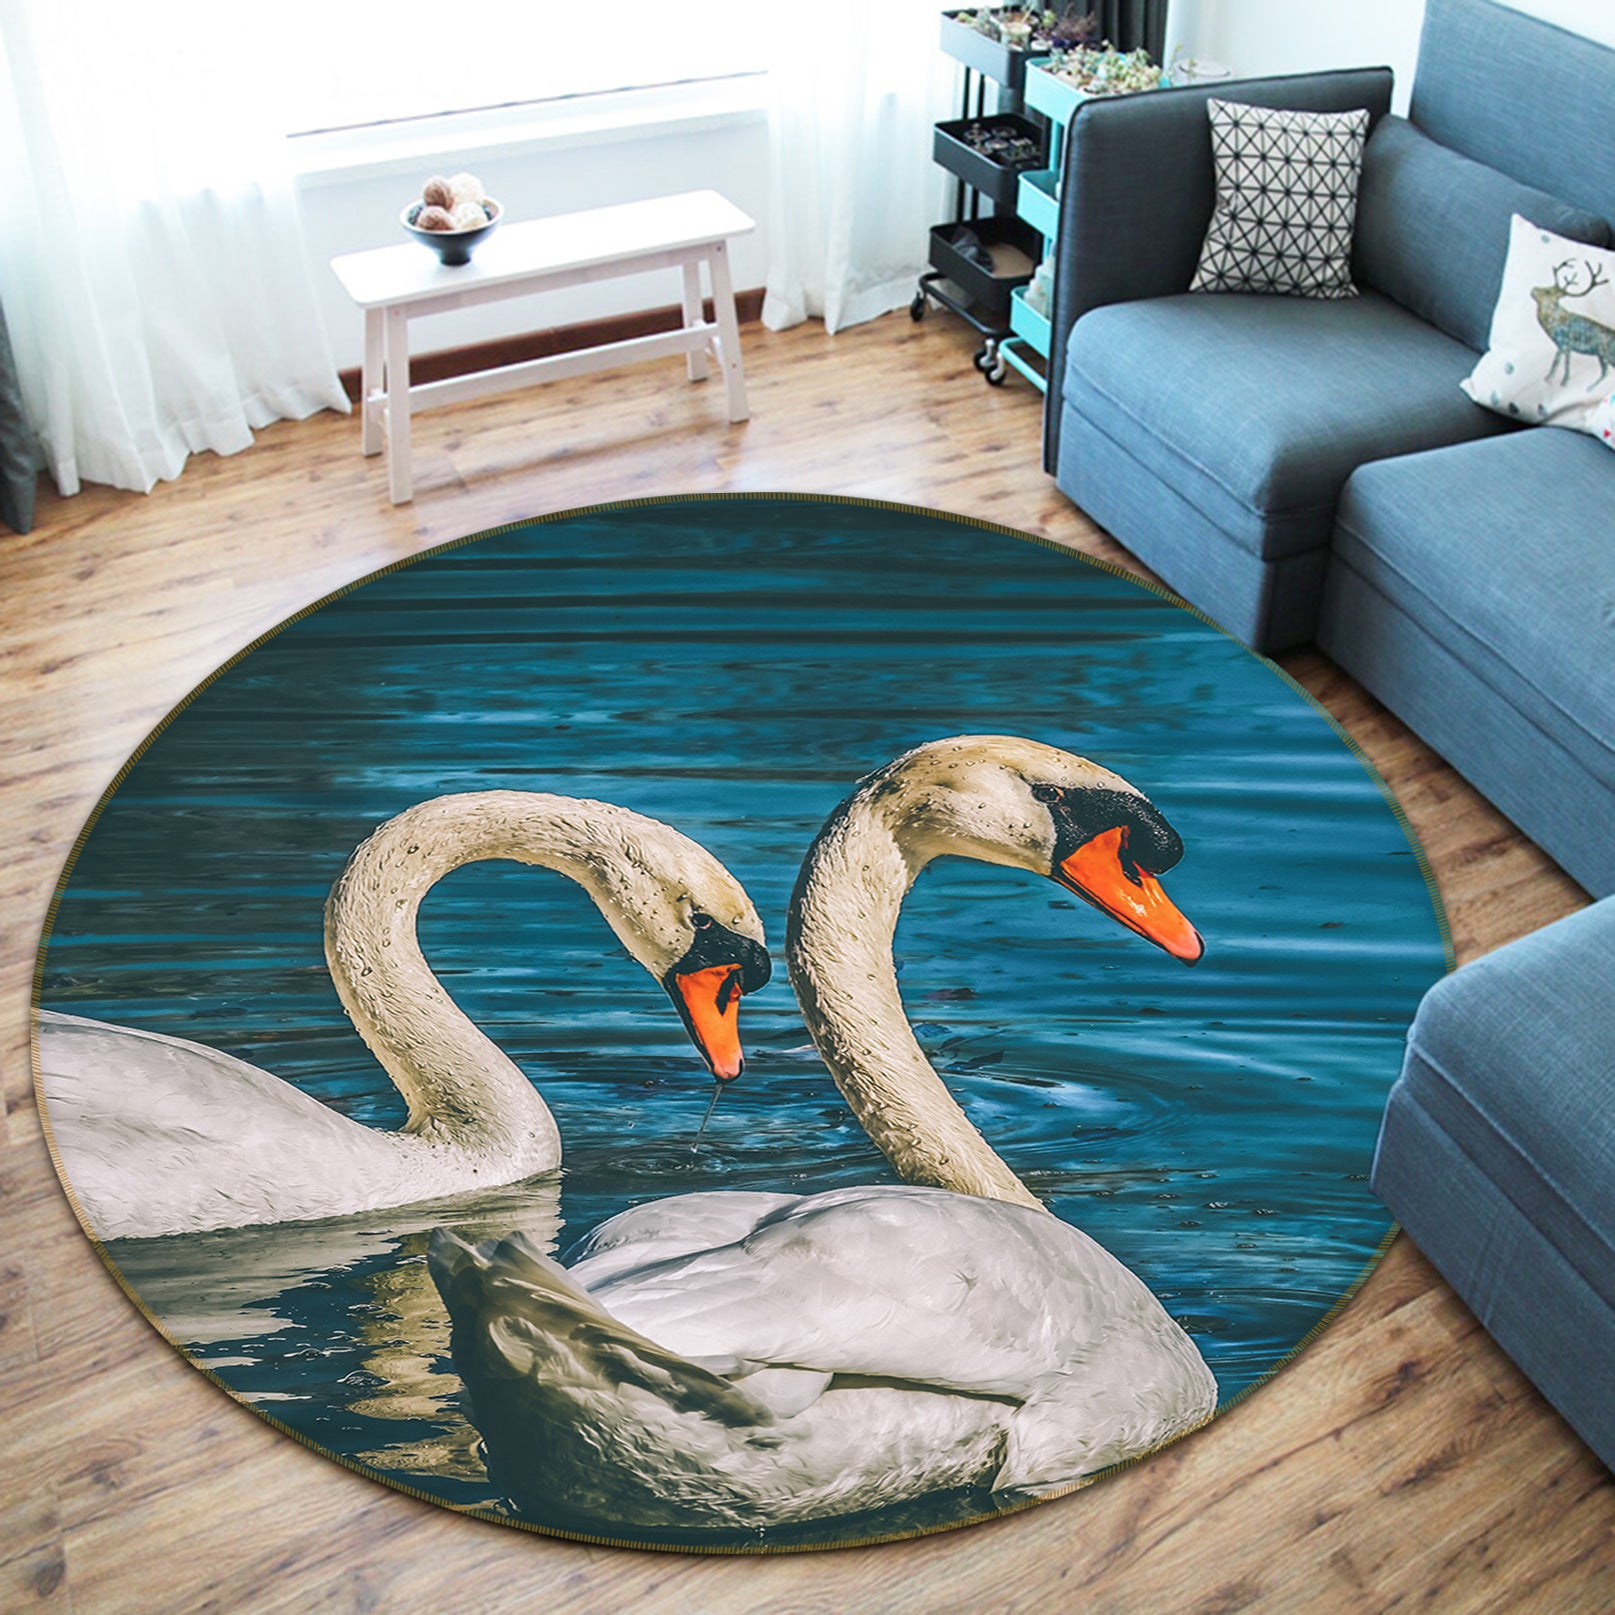 3D Two Swans 82276 Animal Round Non Slip Rug Mat